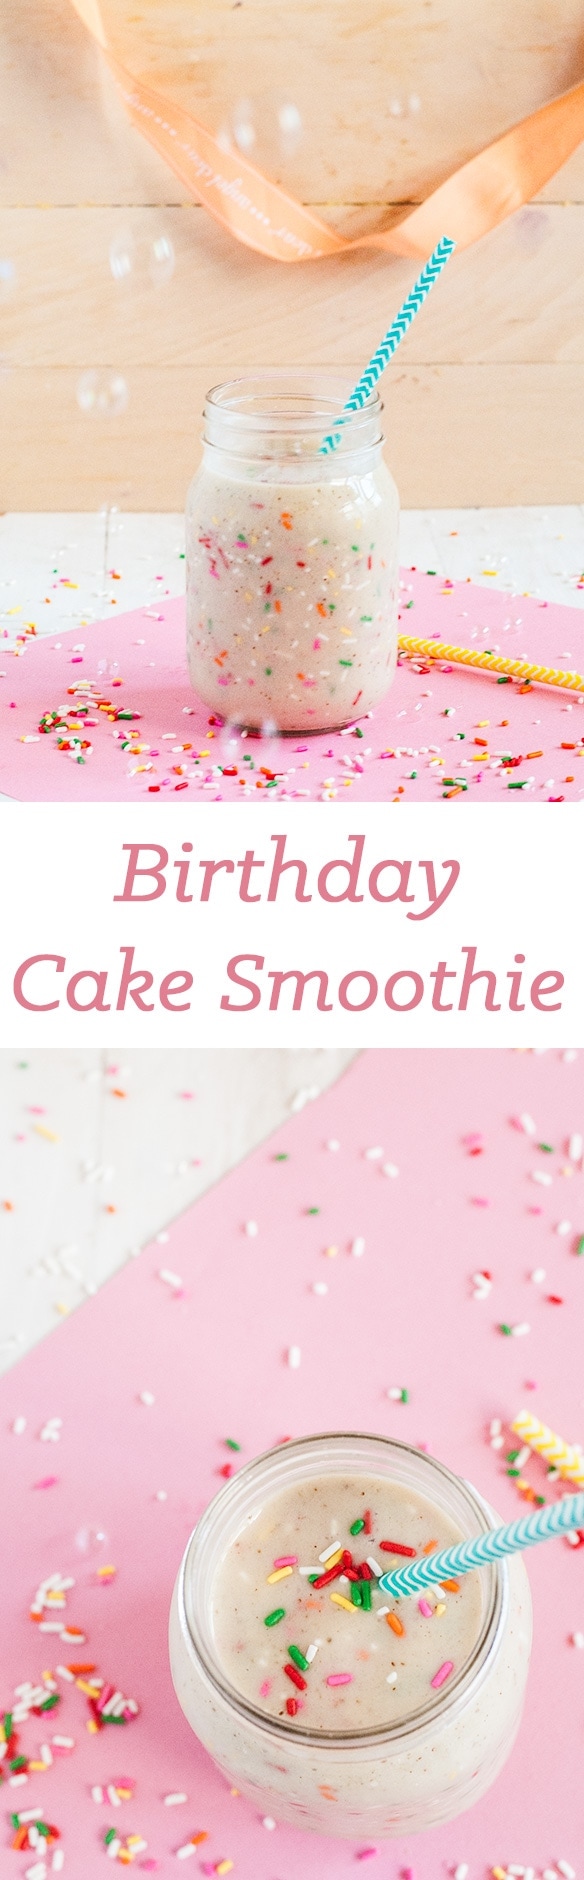 birthday cake smoothie